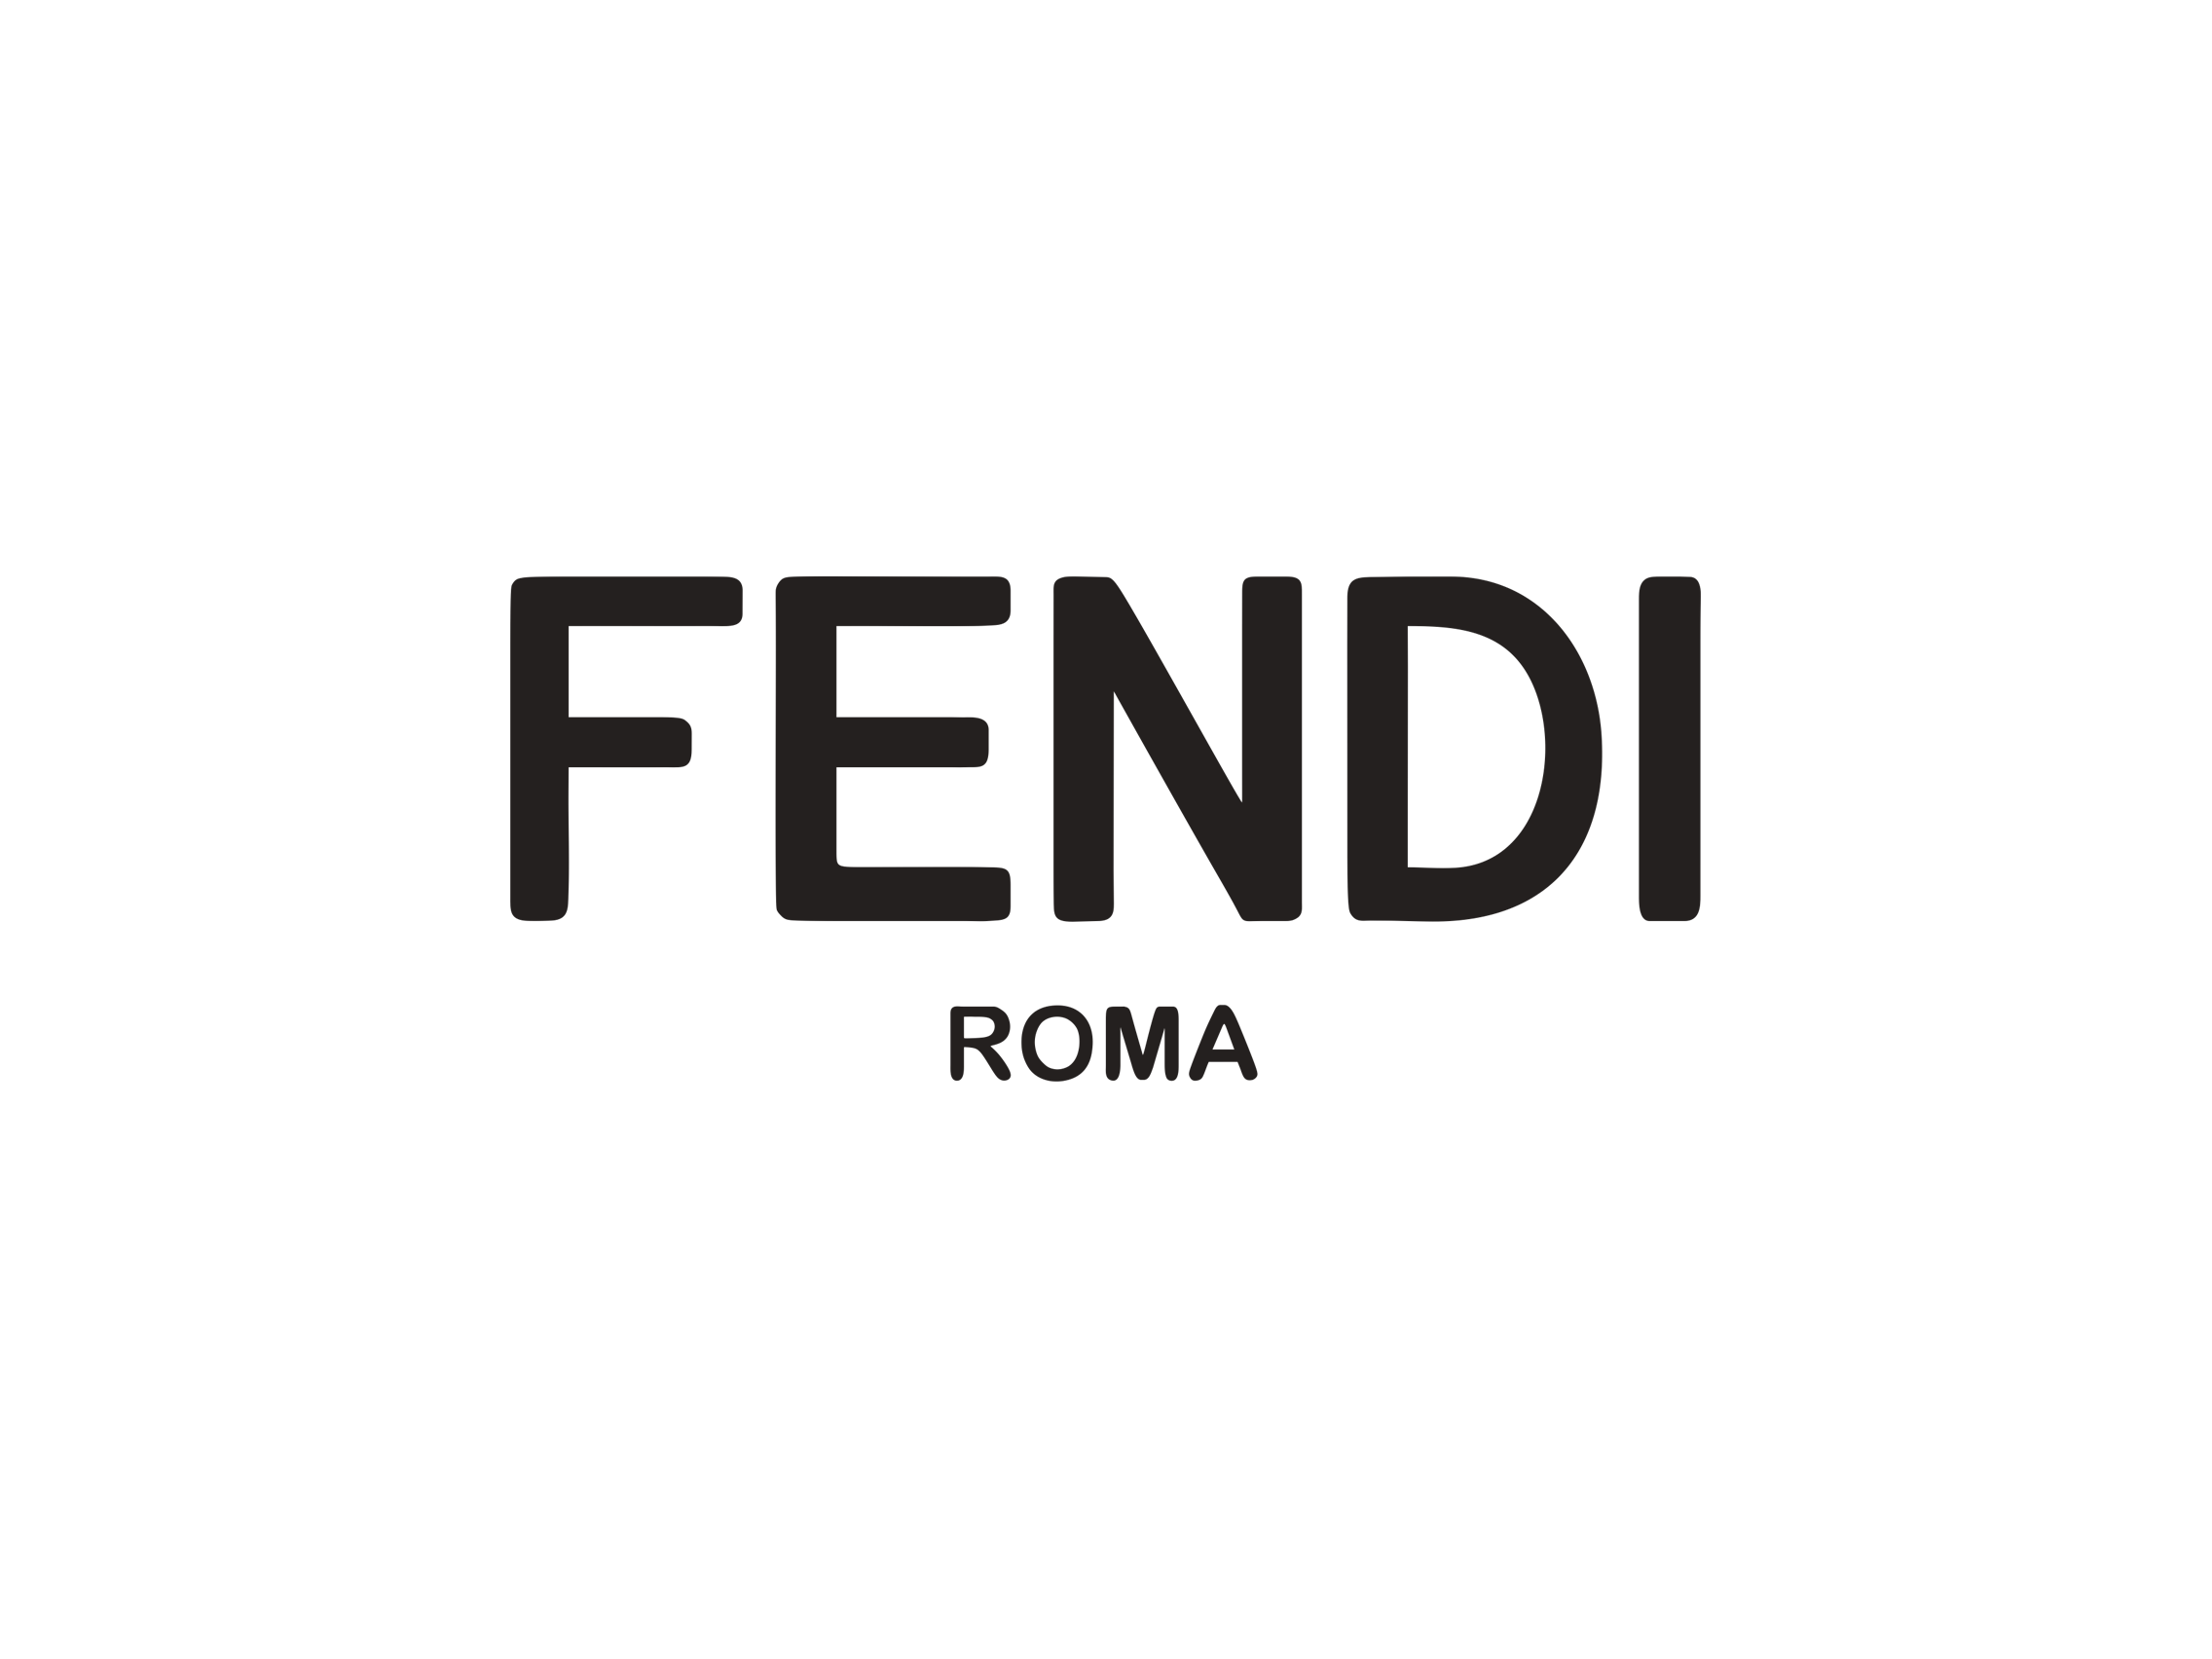 Fendi Roma Logo